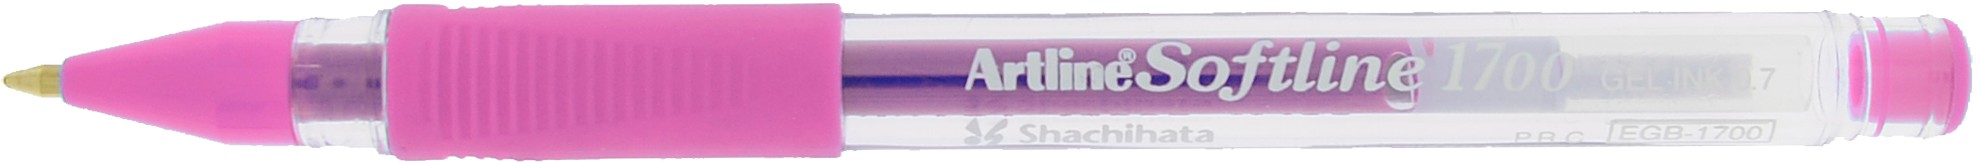 Pix cu gel ARTLINE Softline 1700, rubber grip, varf 0.7mm - roz fluorescent